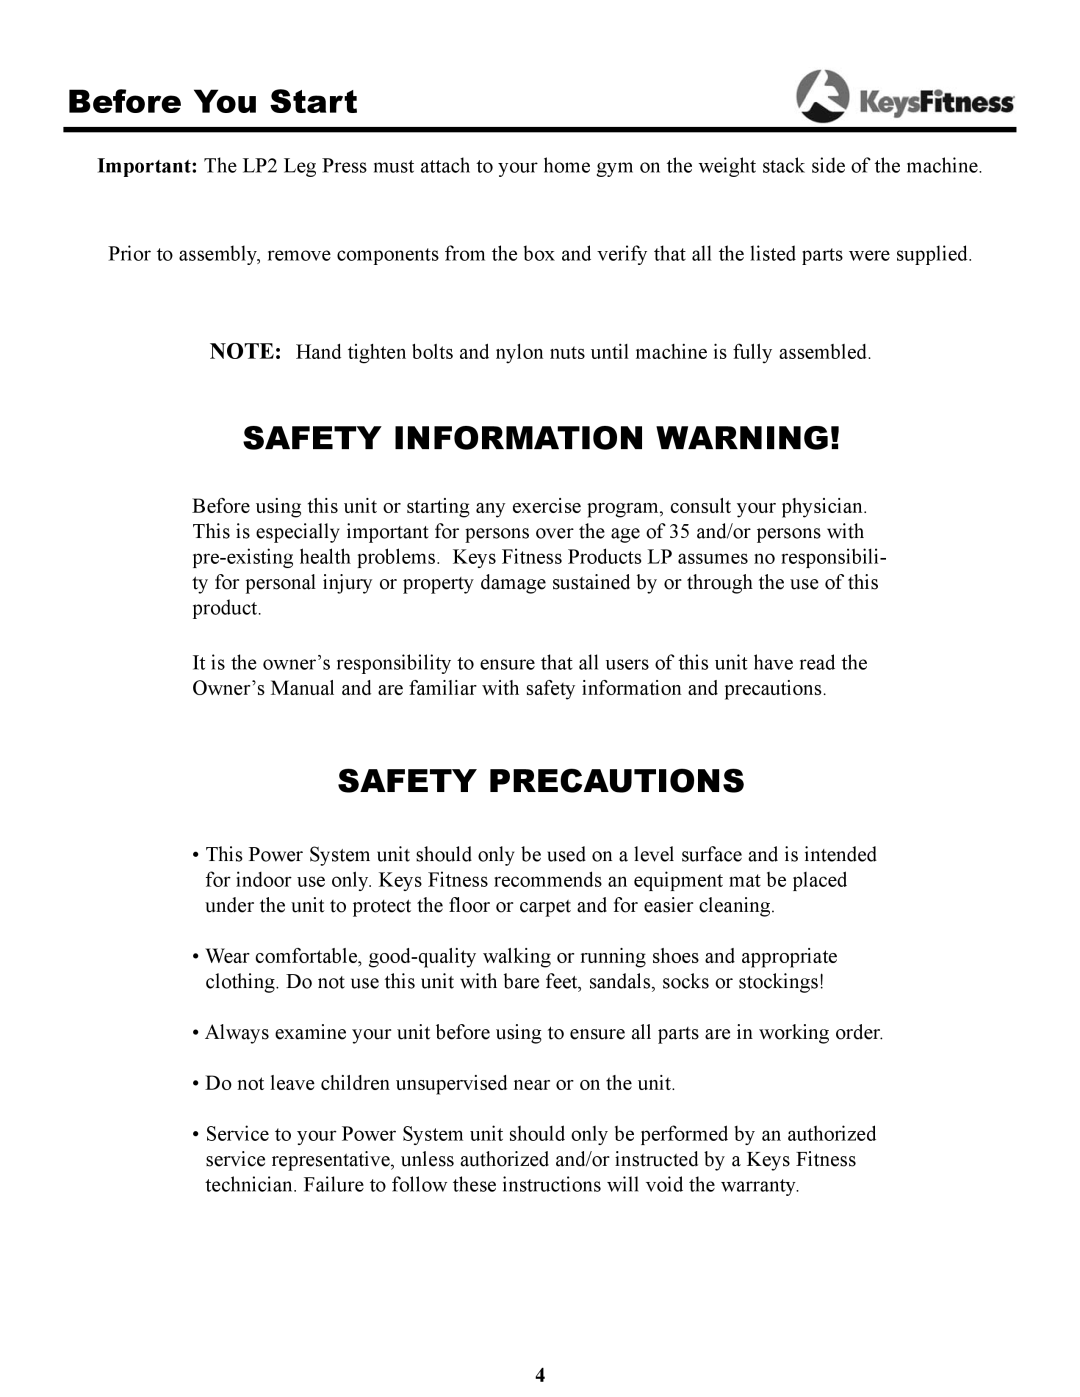 Keys Fitness KPS-LP2 owner manual Before You Start, Safety Information Warning 